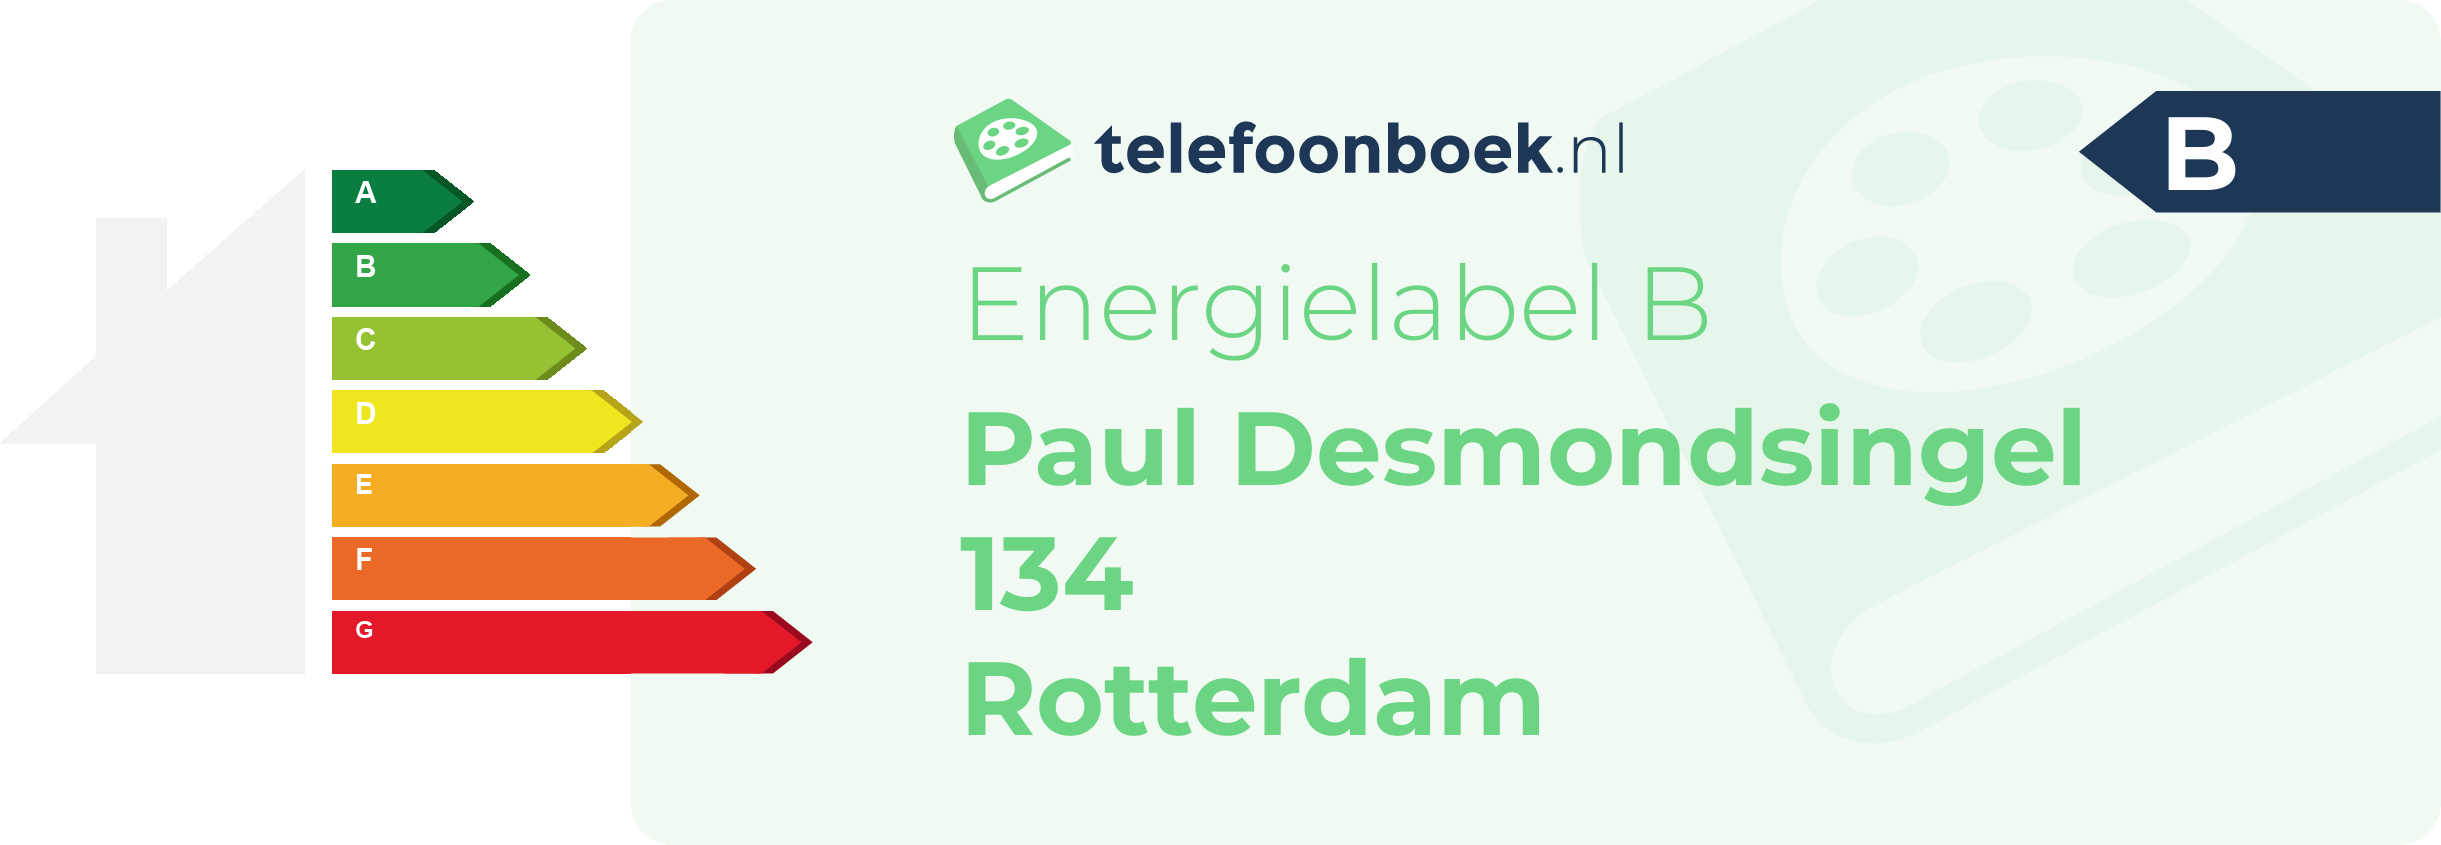 Energielabel Paul Desmondsingel 134 Rotterdam